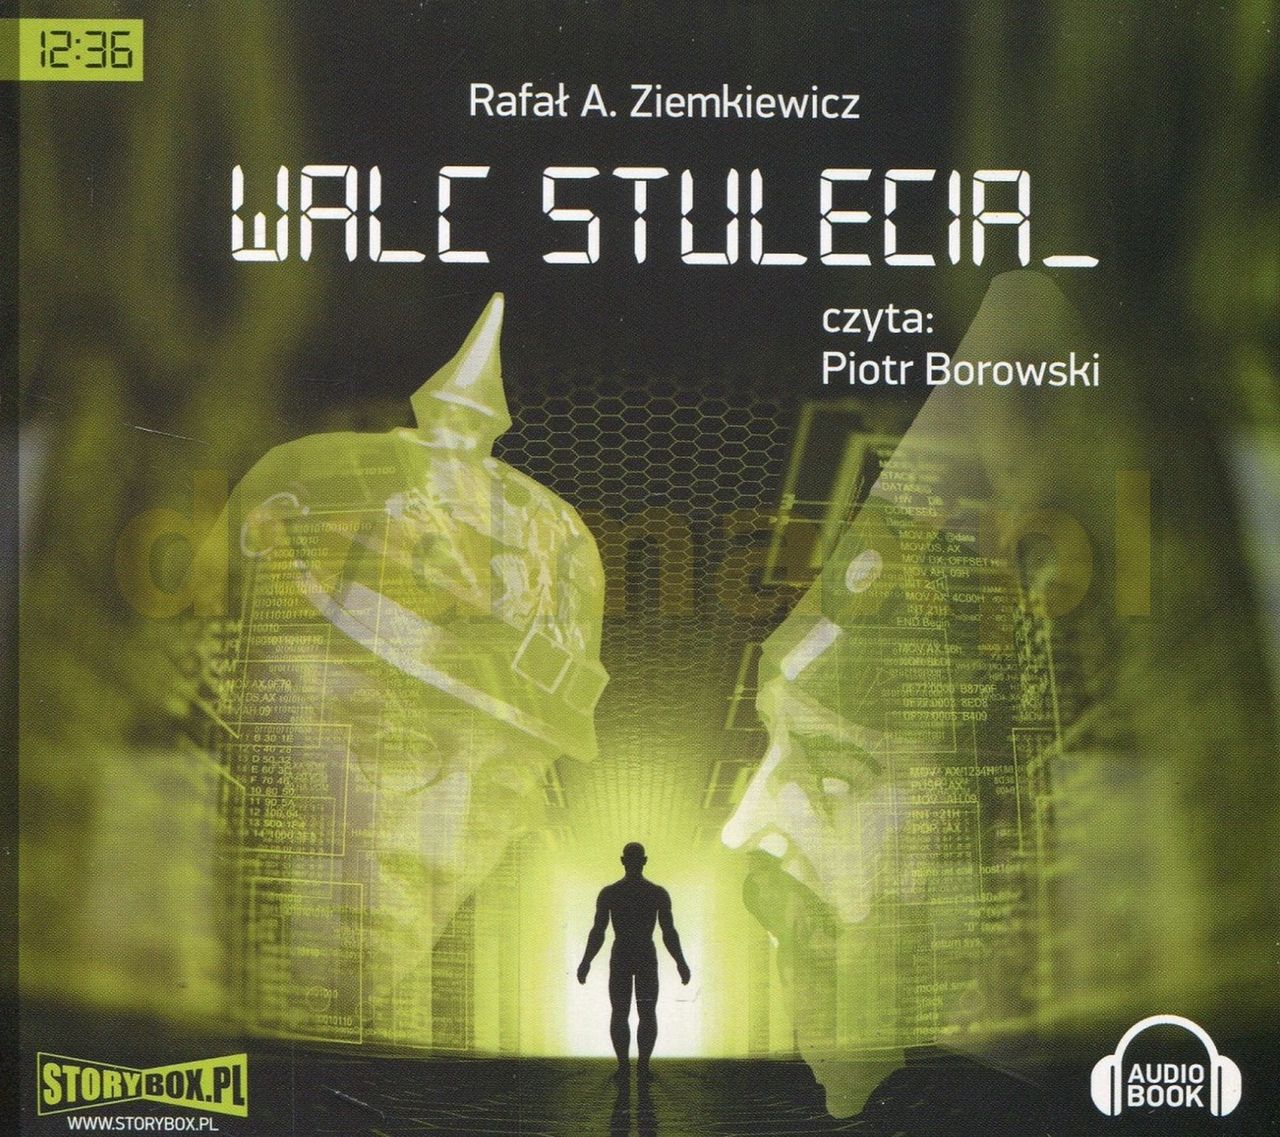 Walc stulecia (okładka audiobooka)